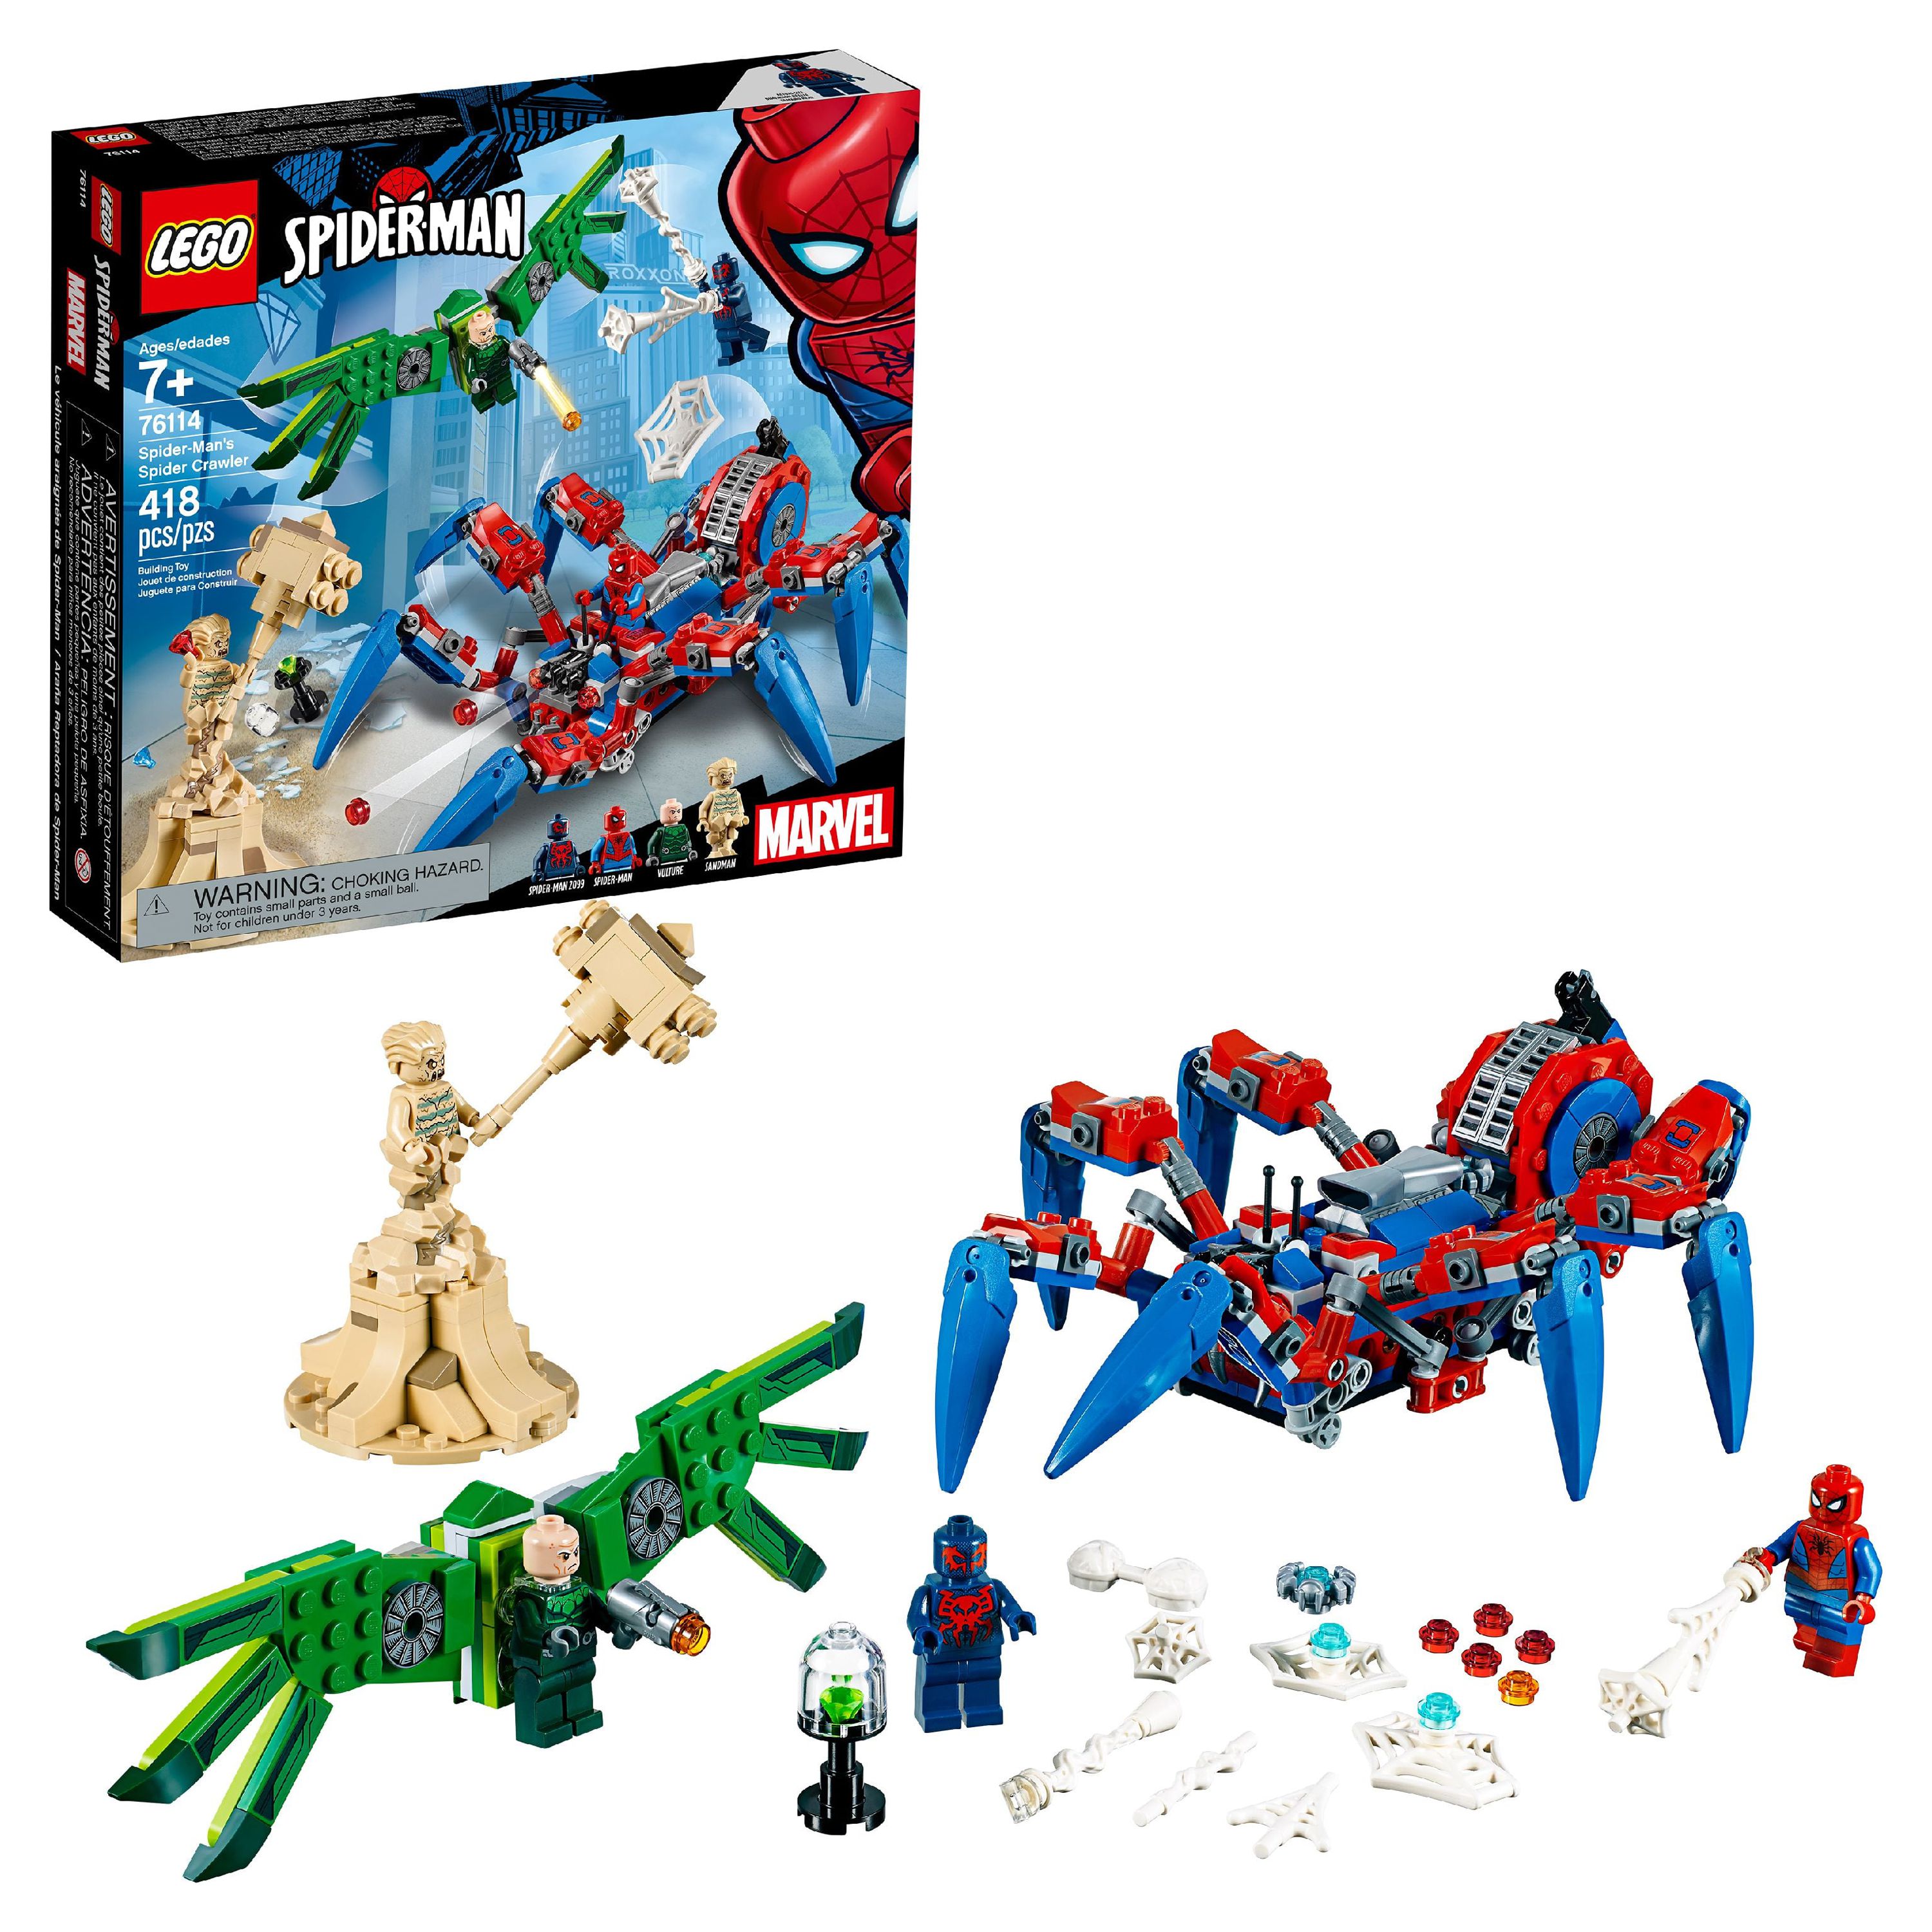 LEGO Super Heroes Spider-Man's Spider Crawler 76114 - image 1 of 8